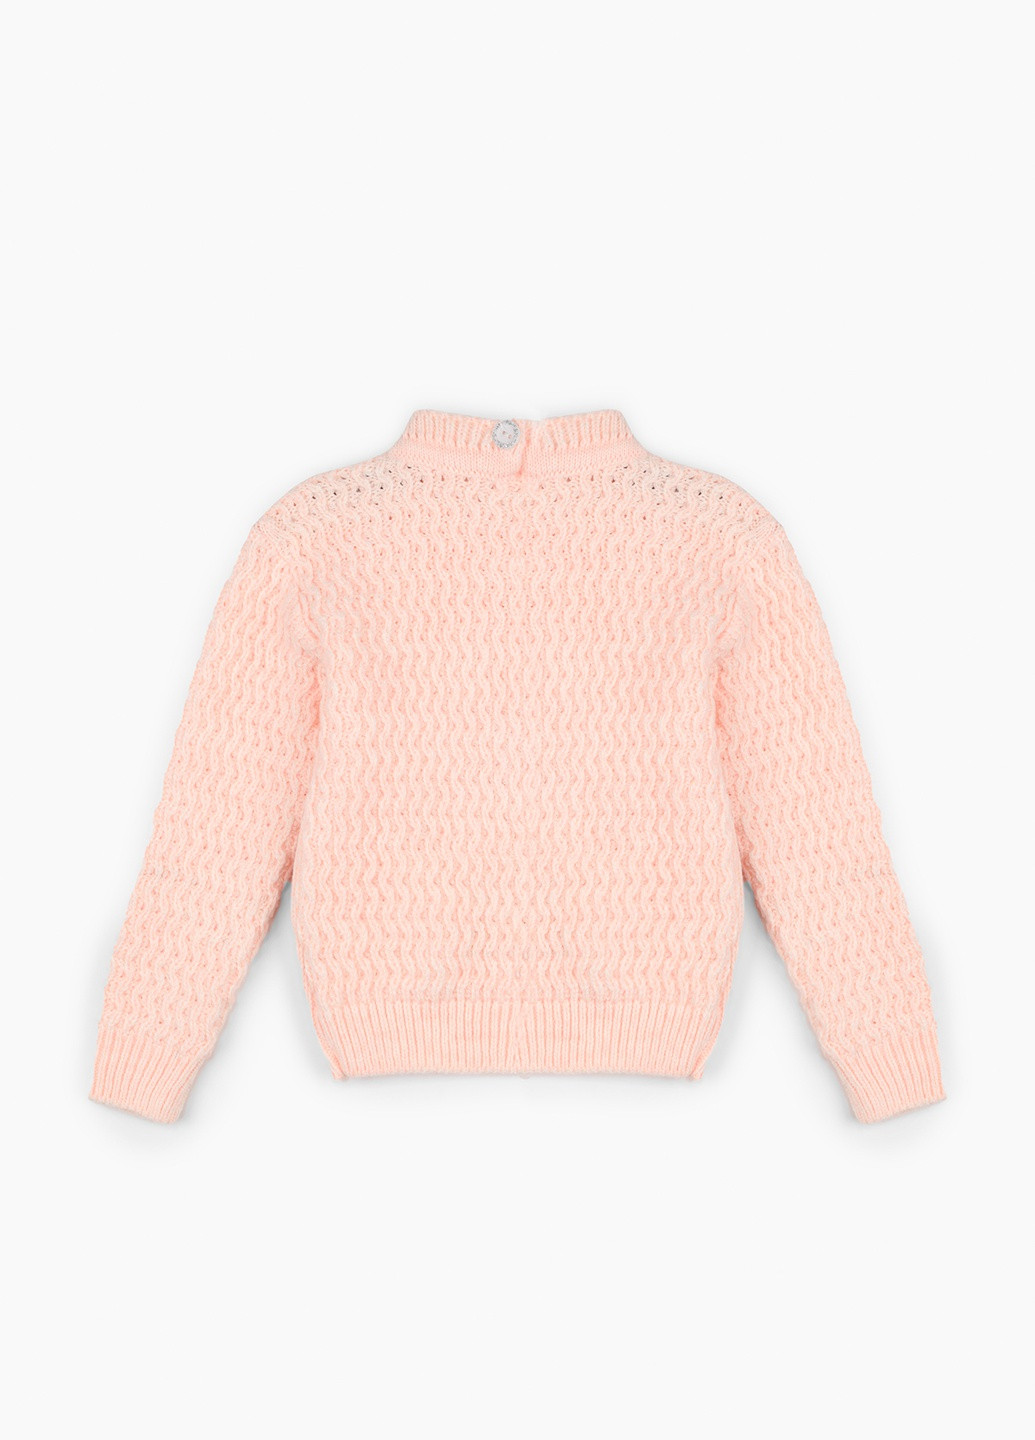 Персиковый зимний свитер Safari